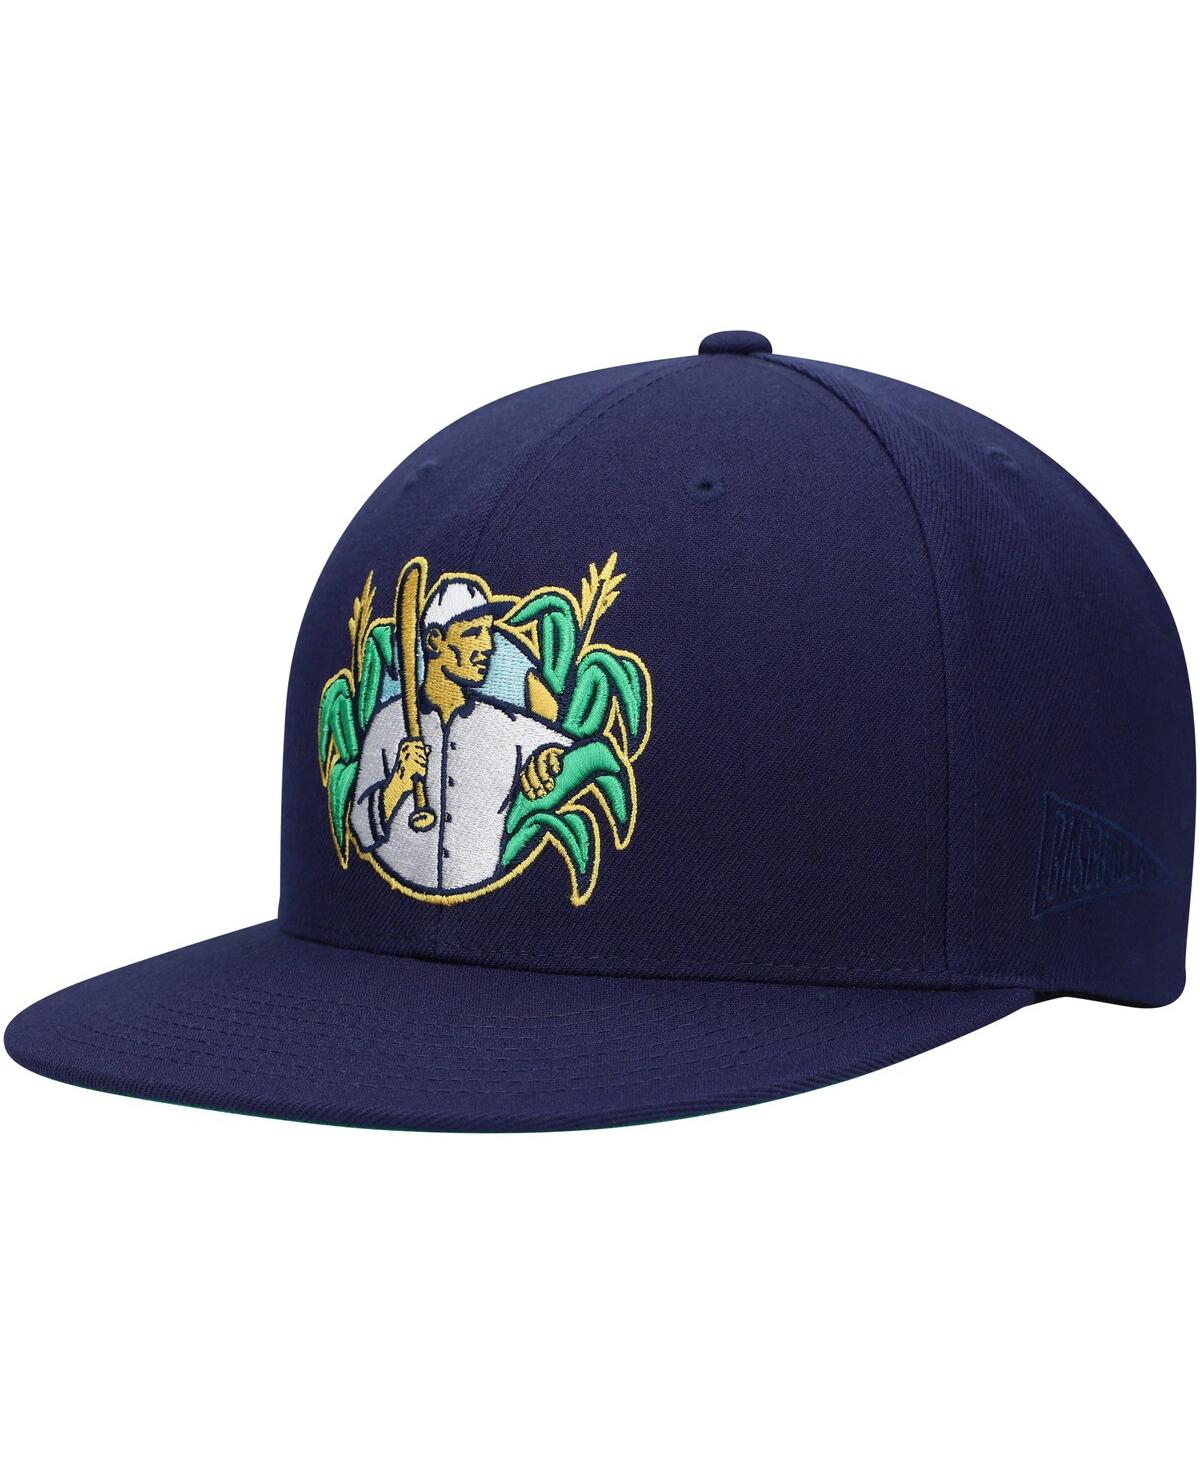 Baseballism Men's  Navy Field Of Dreams People Will Come Snapback Hat